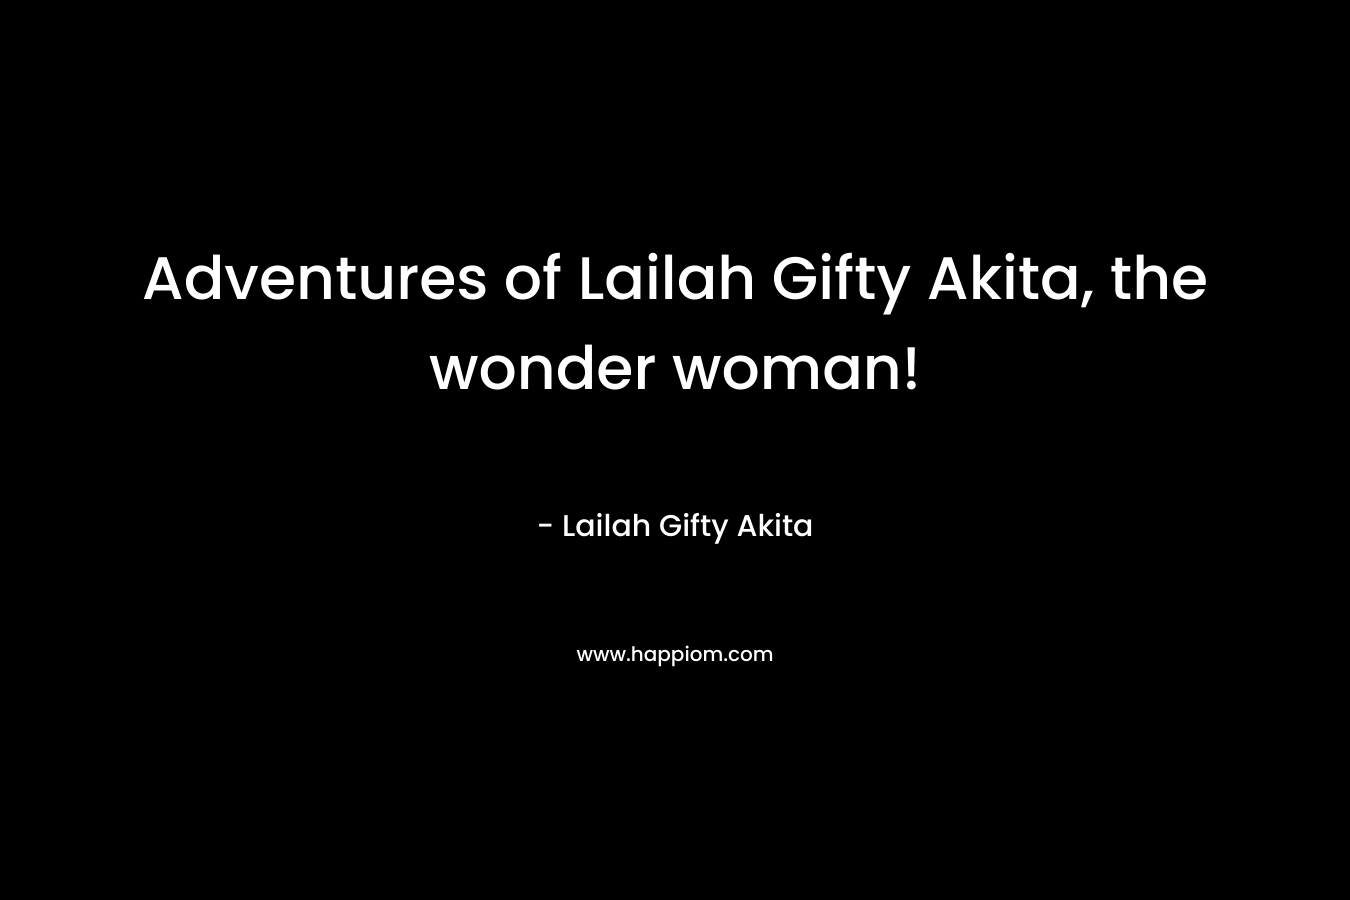 Adventures of Lailah Gifty Akita, the wonder woman!